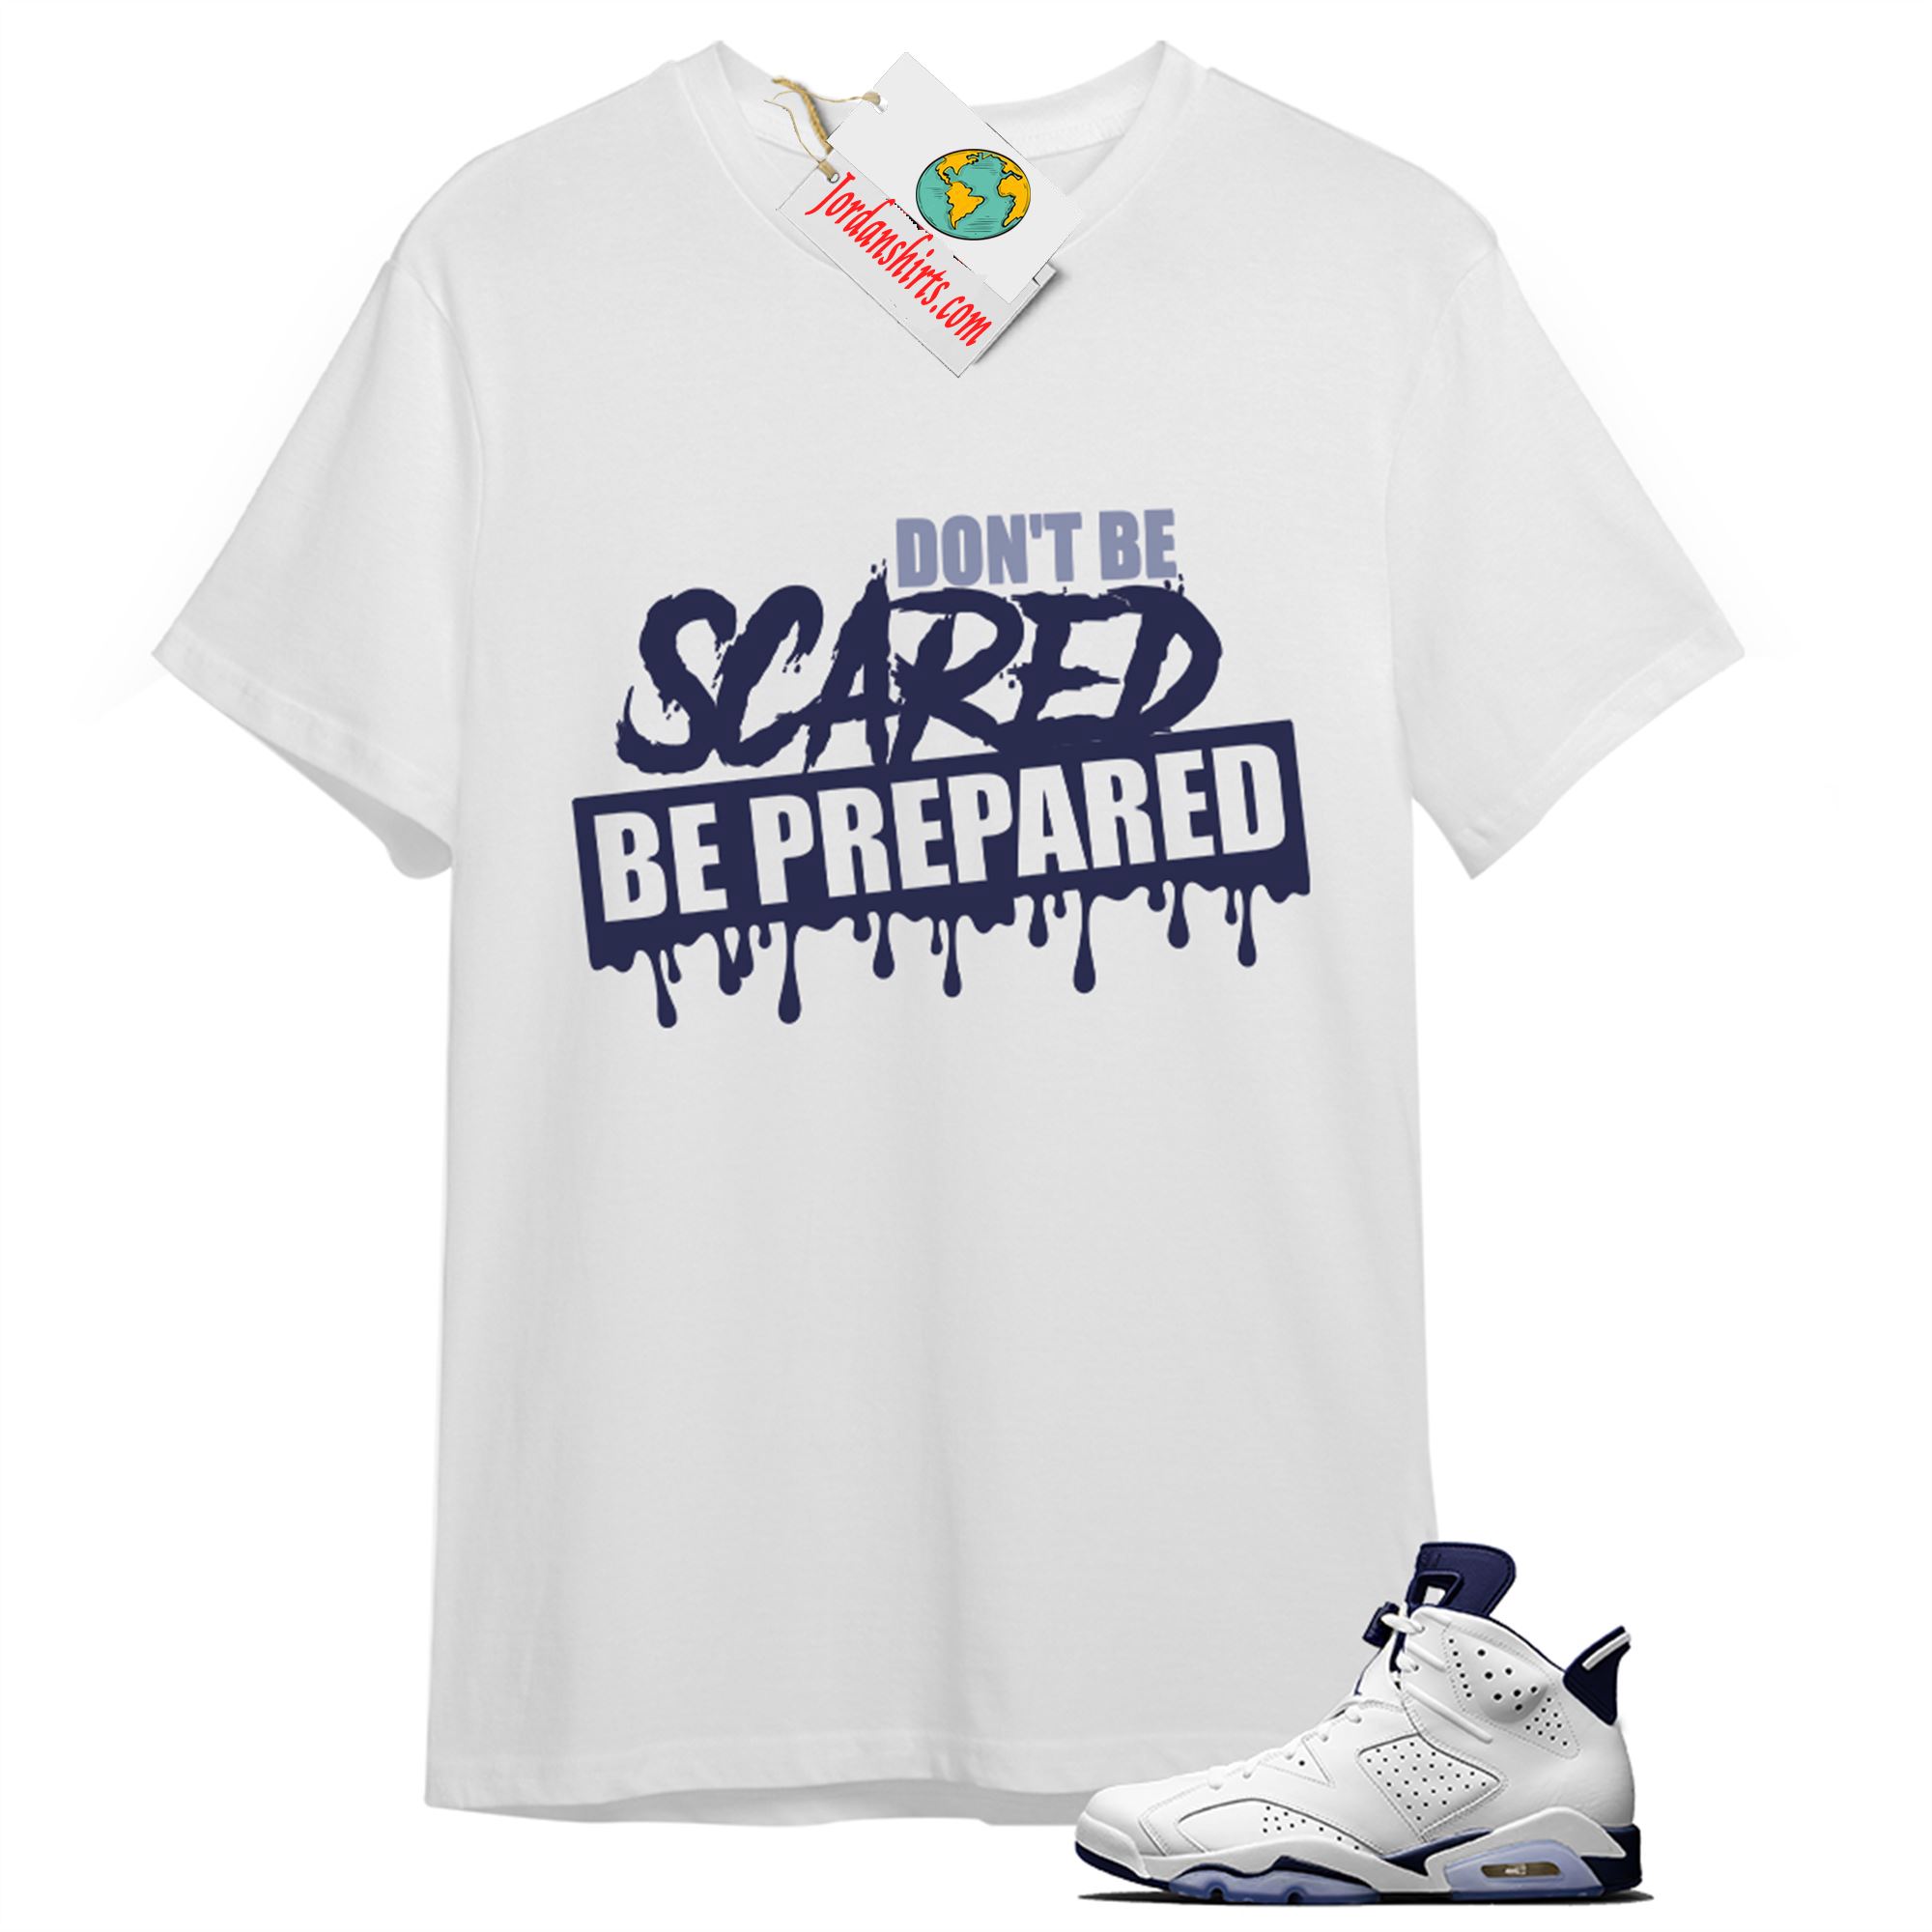 Jordan 6 Shirt, Dont Be Scared Be Prepared White T-shirt Air Jordan 6 Midnight Navy 6s Full Size Up To 5xl